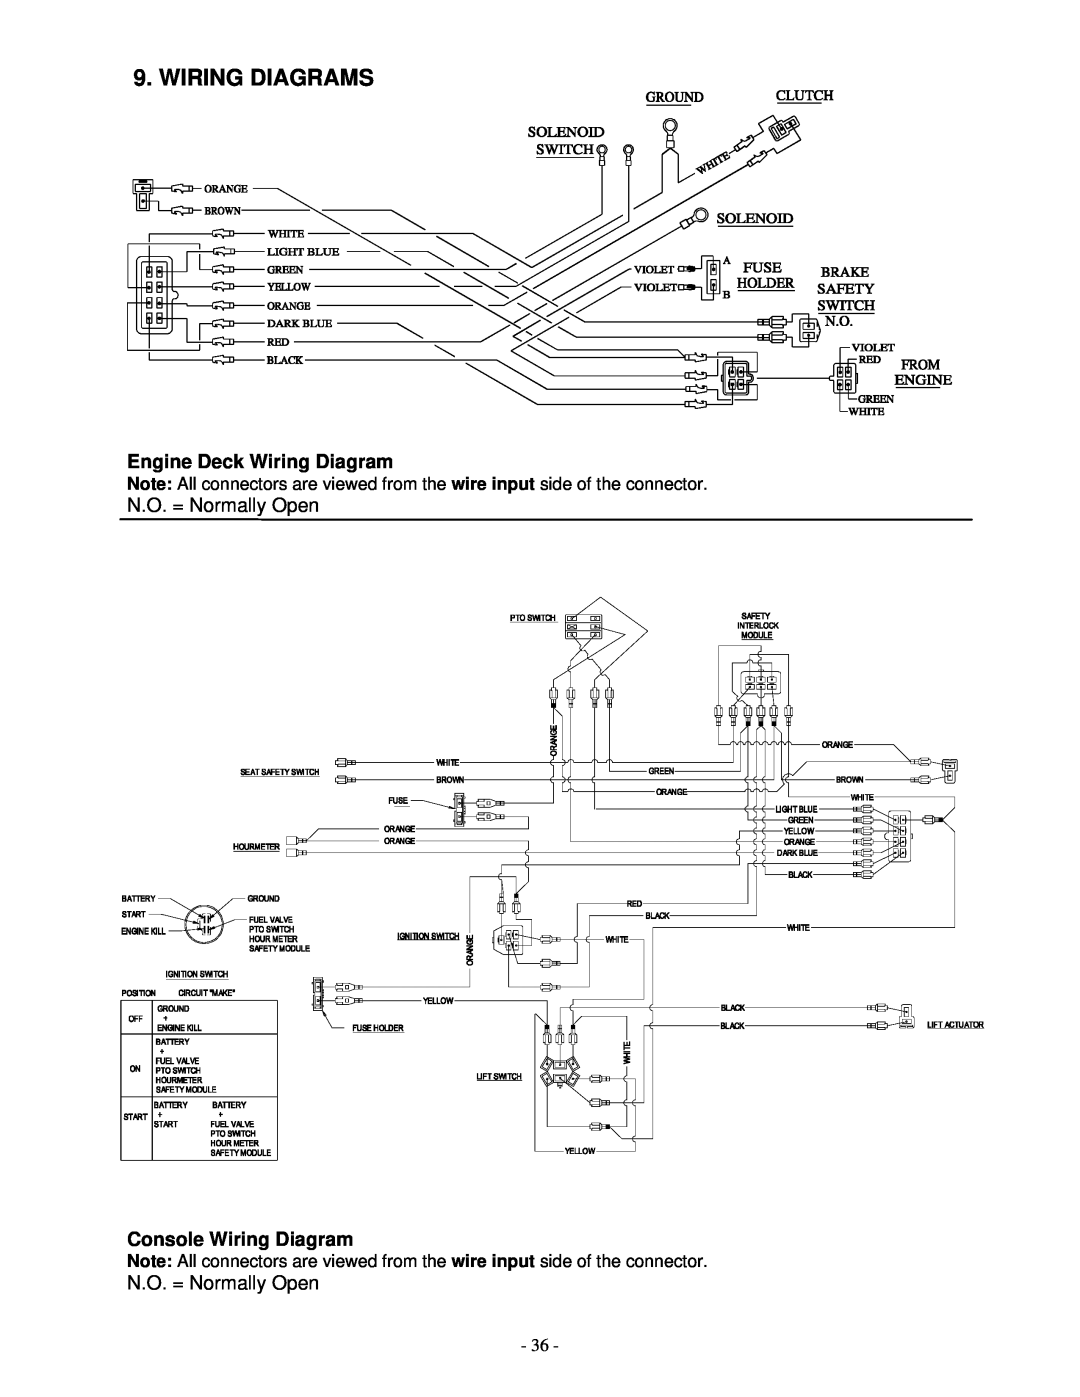 Exmark FMD 604, FMD 524 manual Wiring Diagrams, Engine Deck Wiring Diagram, Console Wiring Diagram 